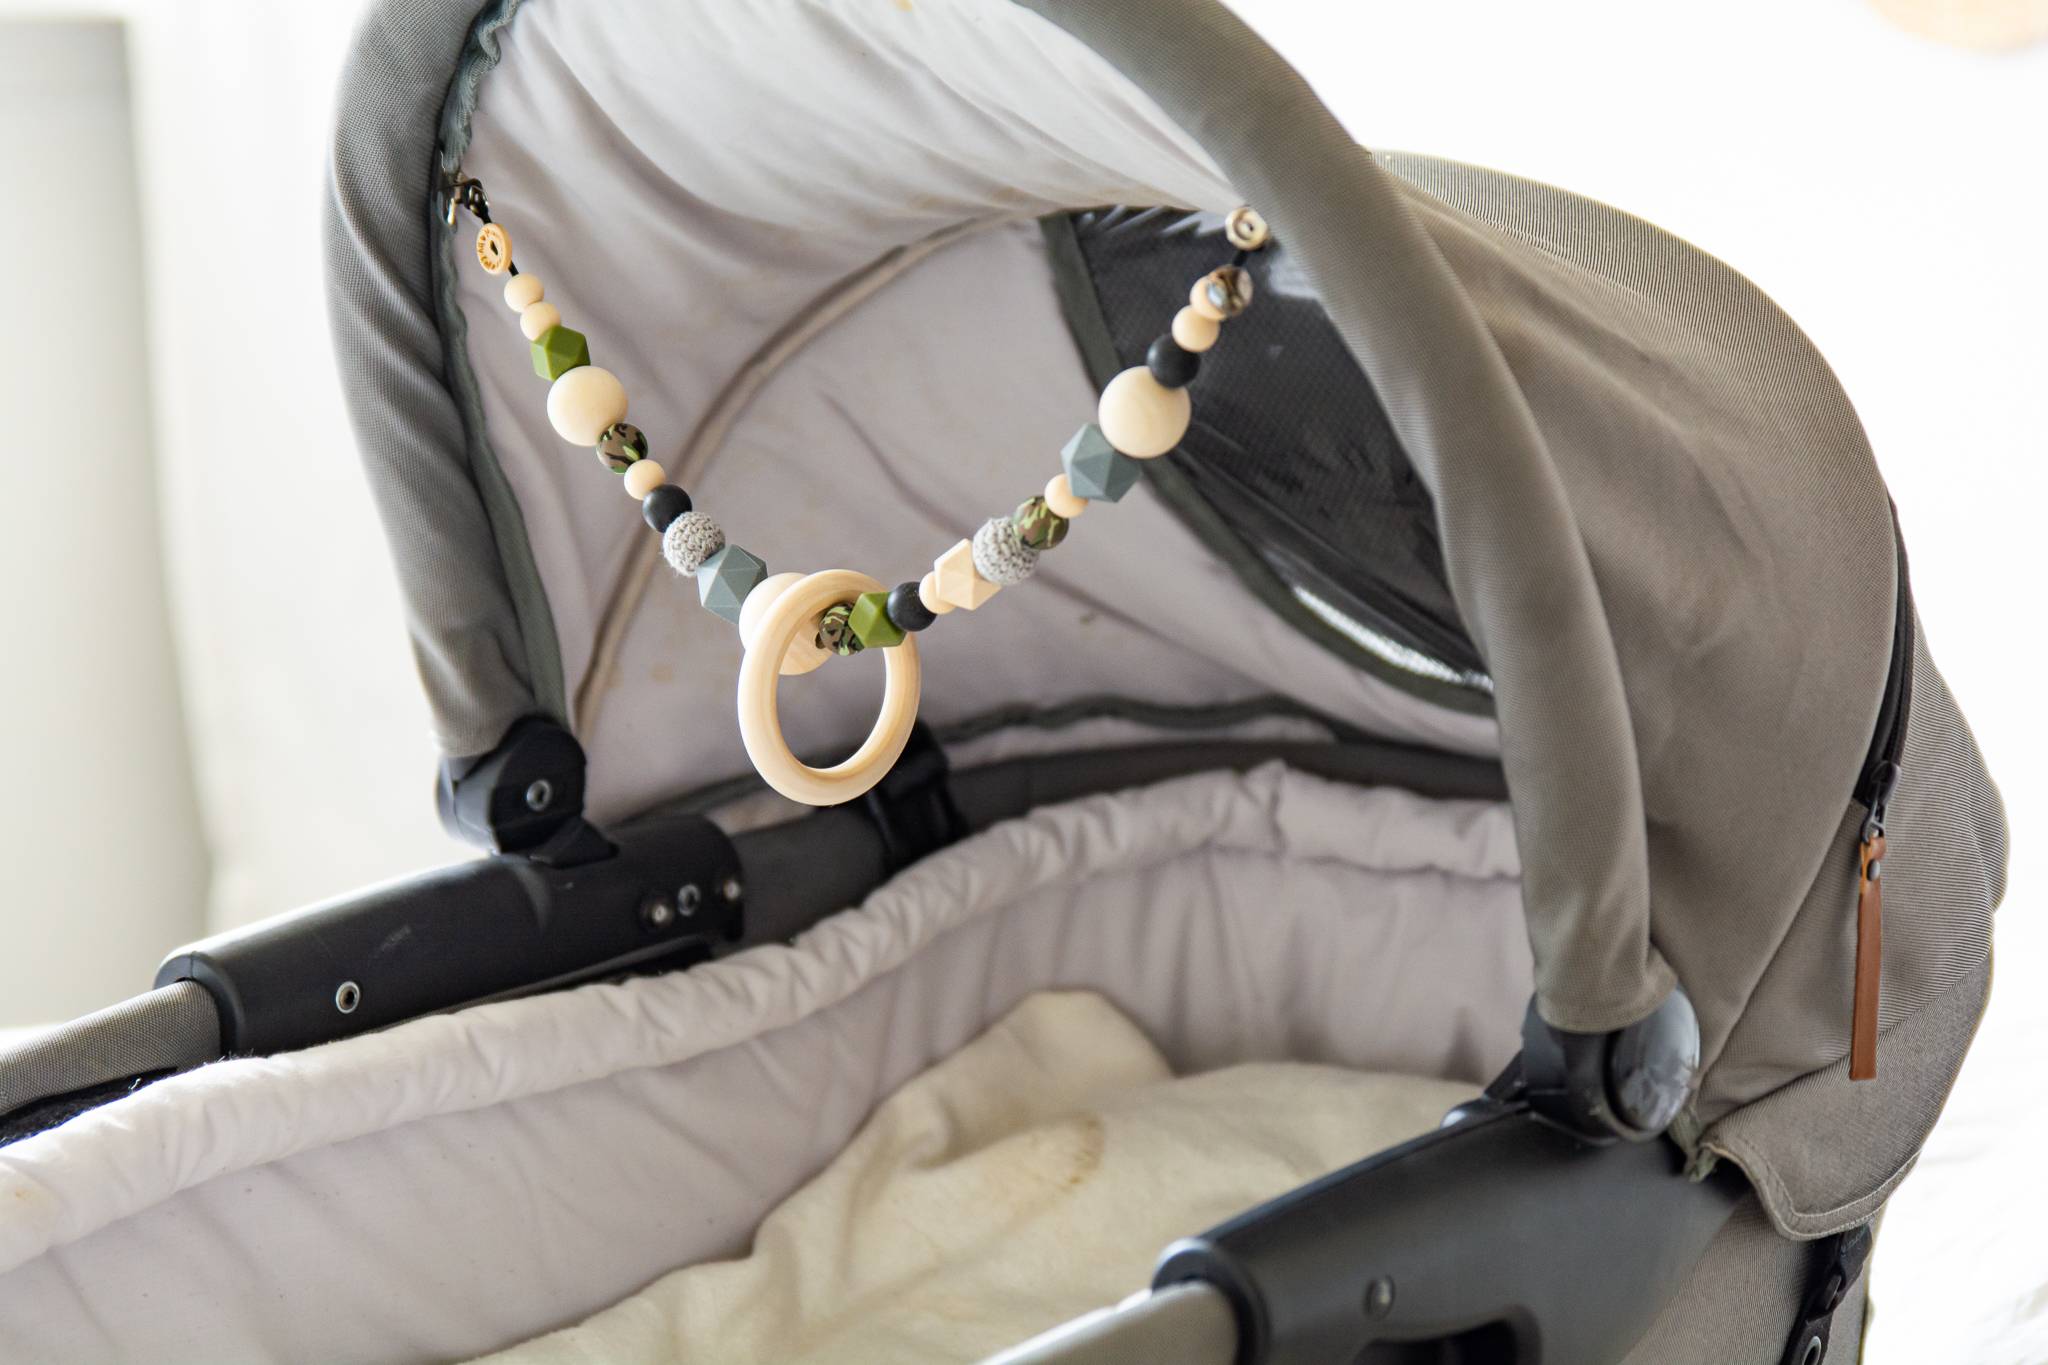 Vermeend Zoek machine optimalisatie genoeg Wagenspanner 'Sem' | Musthaves by Kell - De leukste musthaves voor jouw  baby of peuter